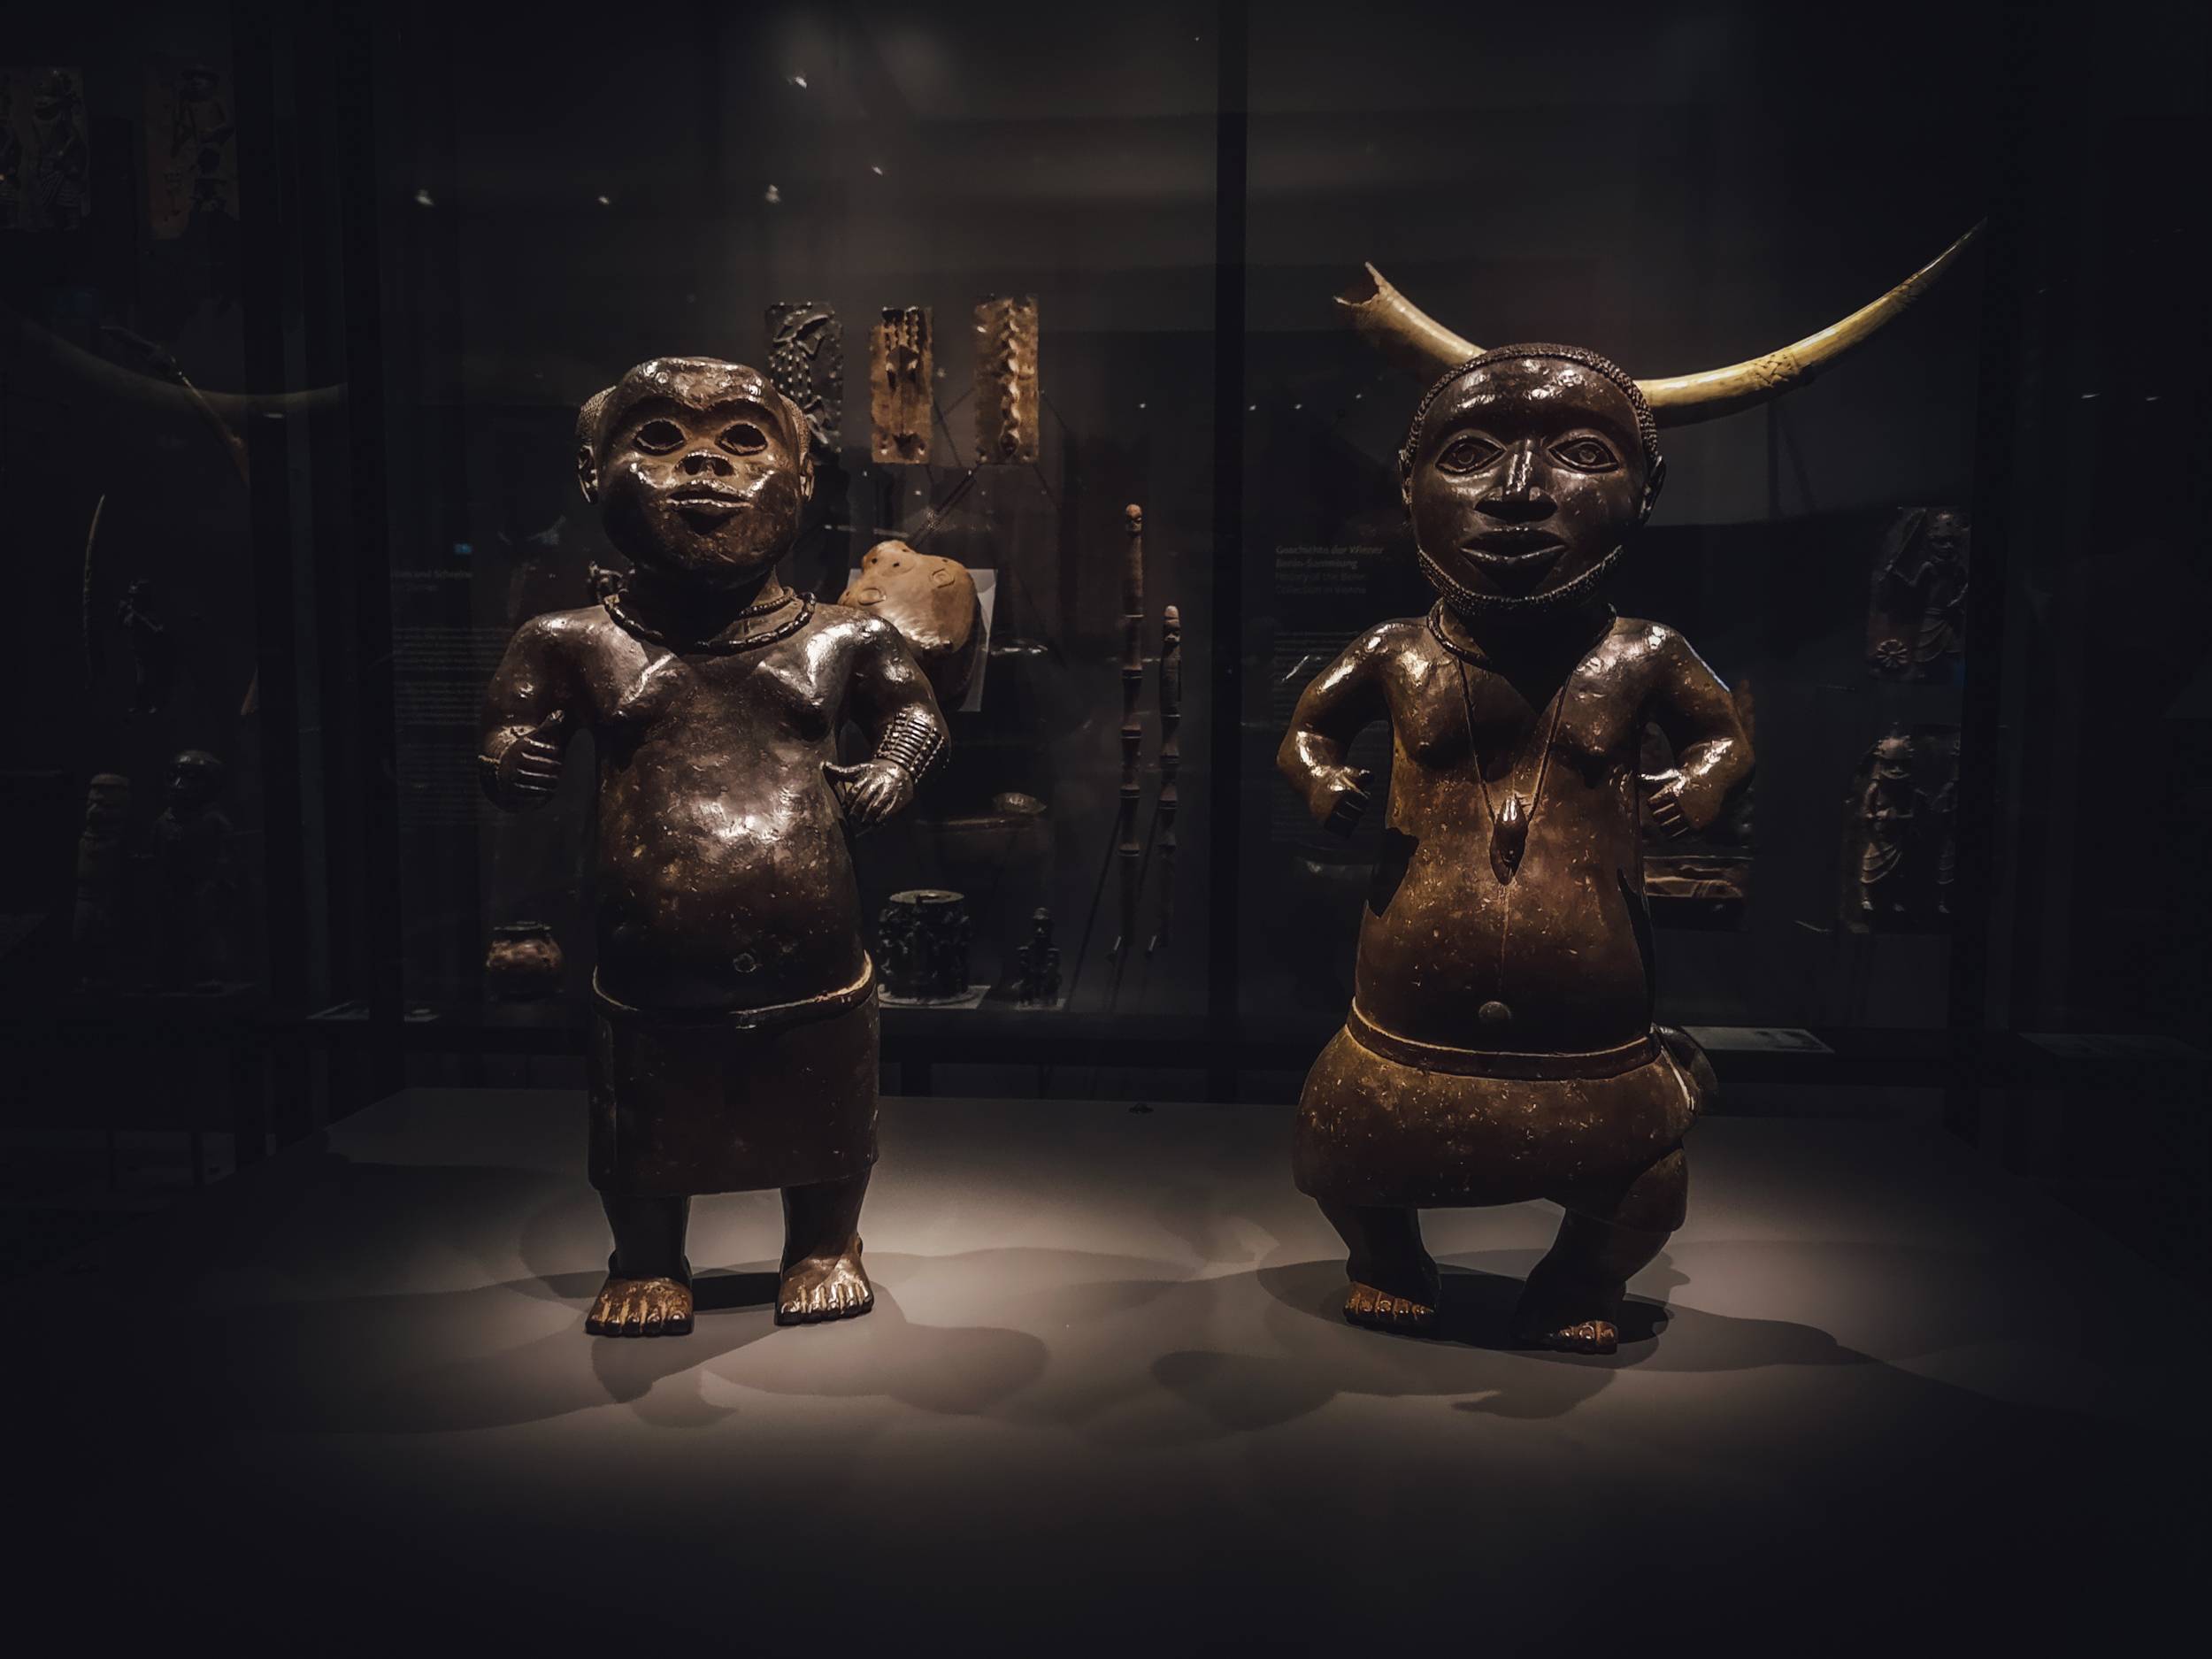 Two court dwarfs of BeninKingdom in Weltmuseum Wien, Austria